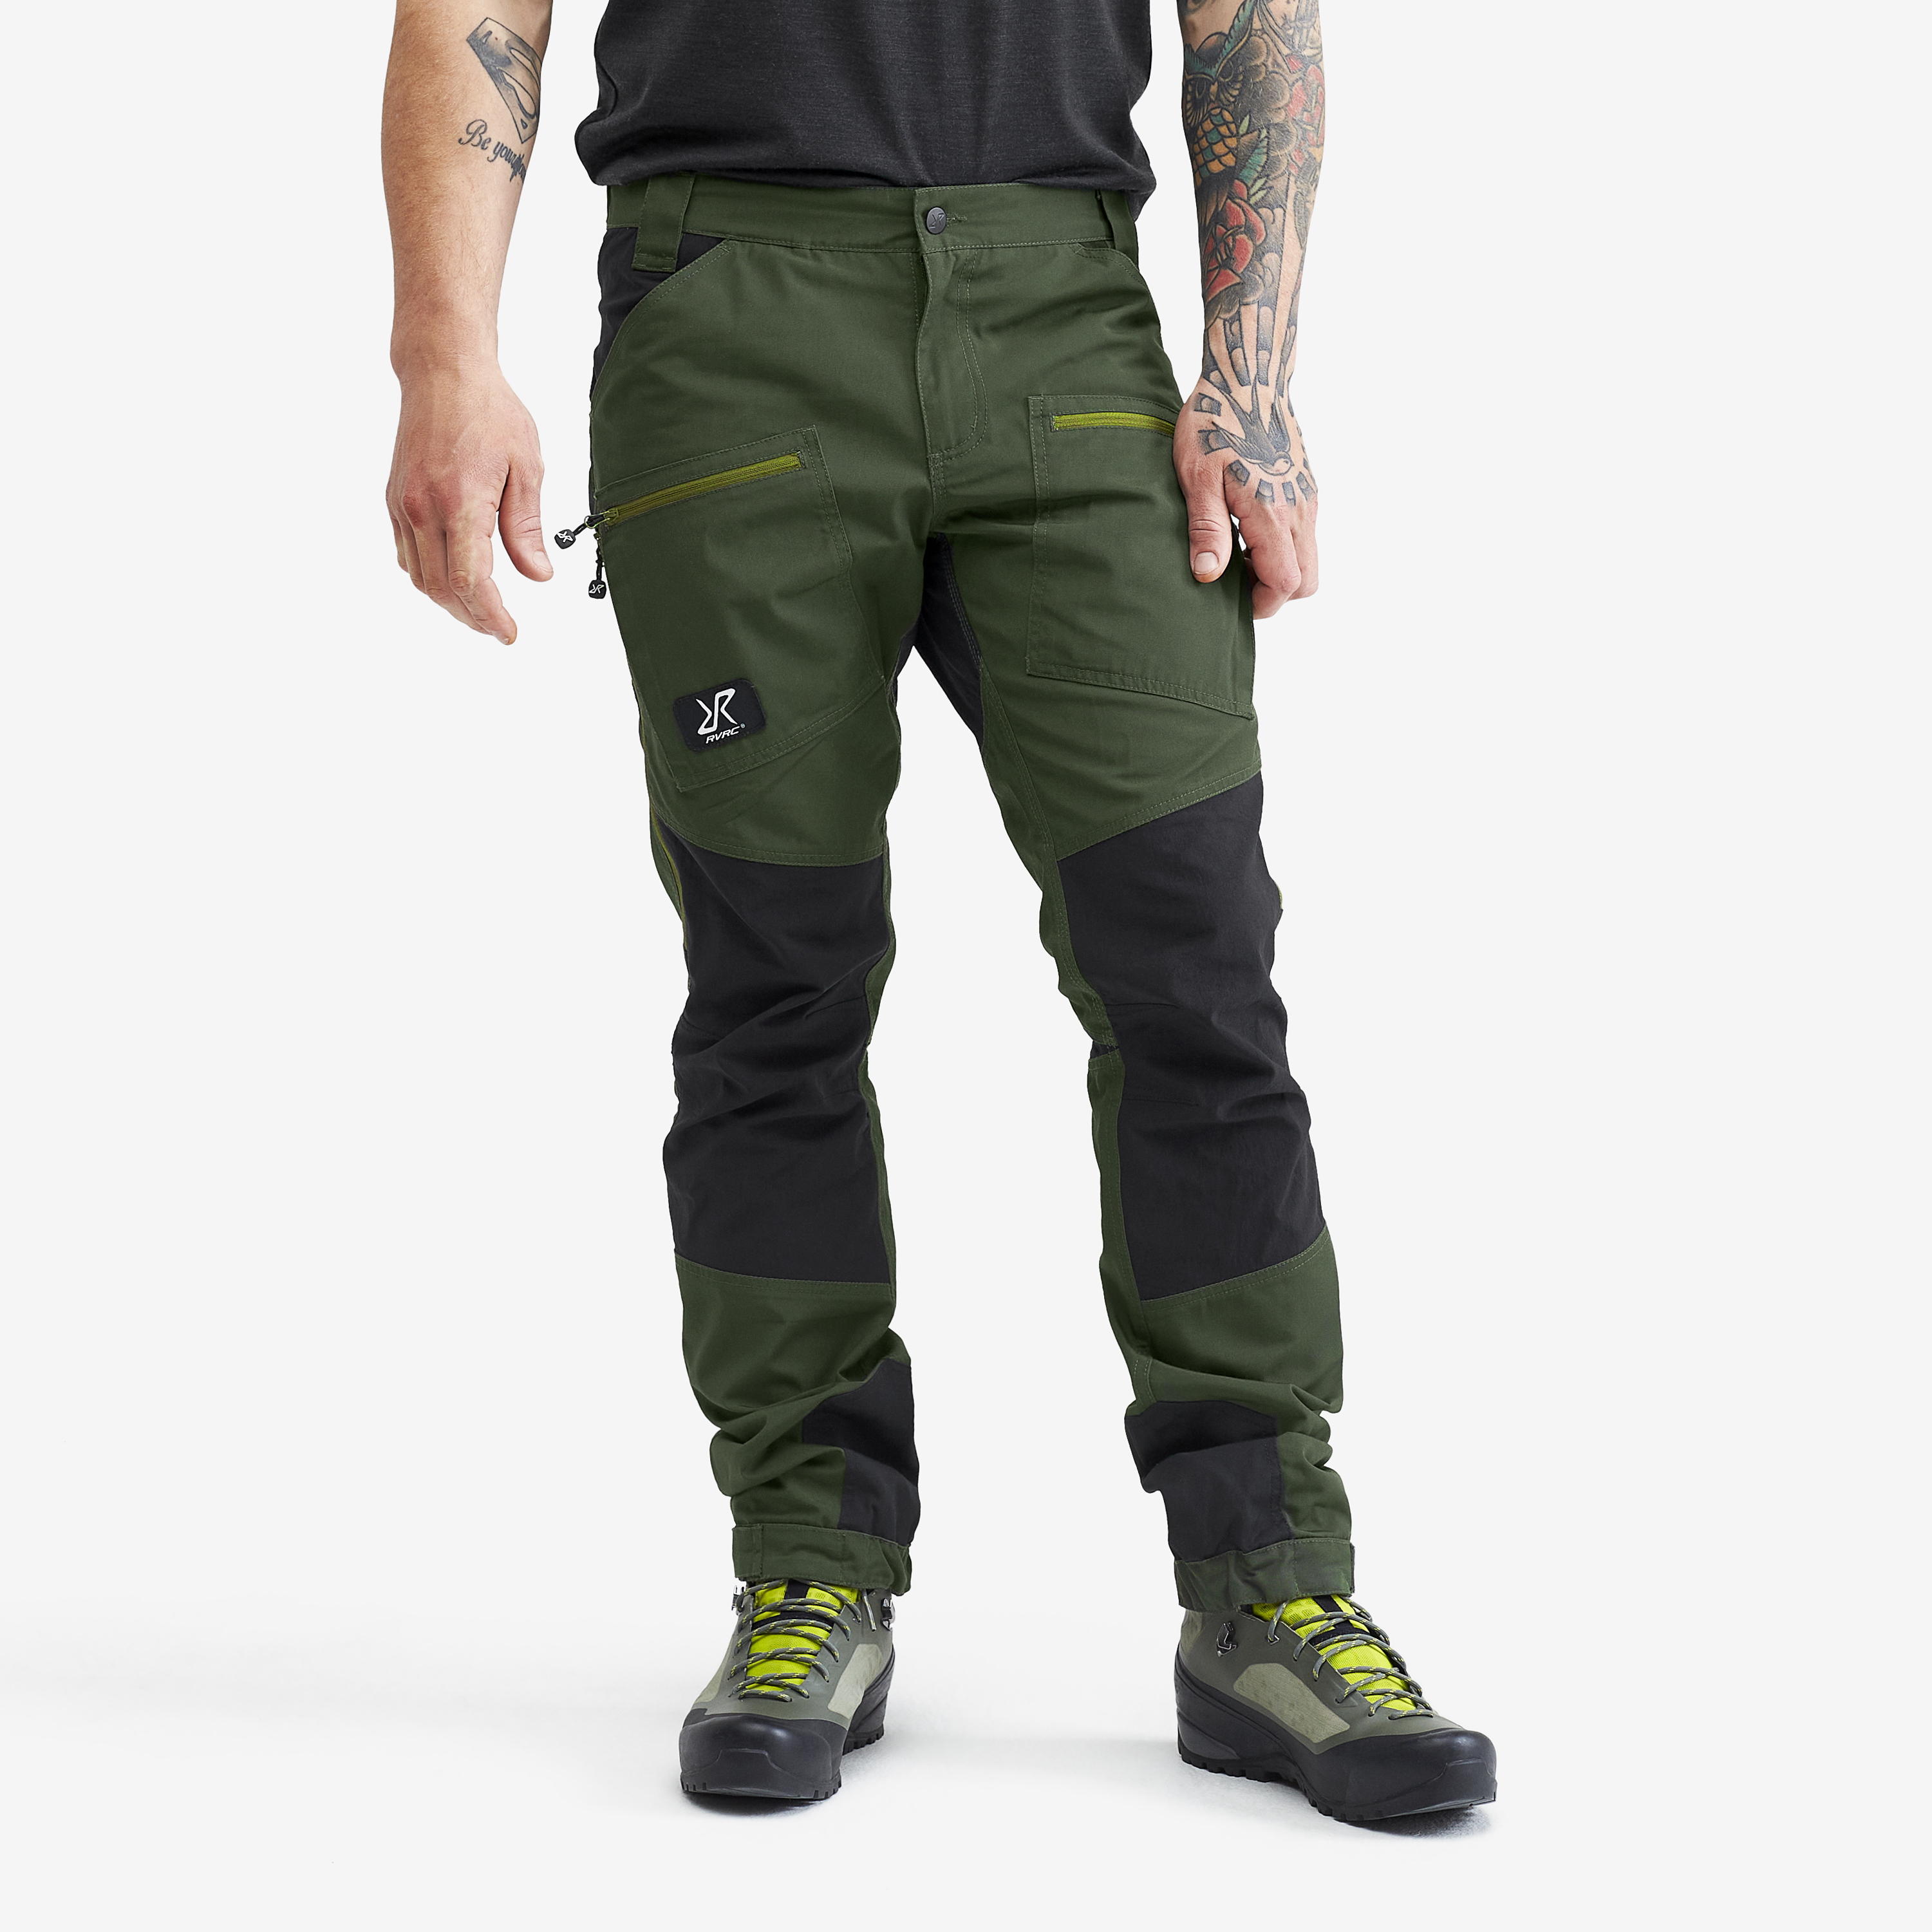 Nordwand Pro Pants Green/Black Herr